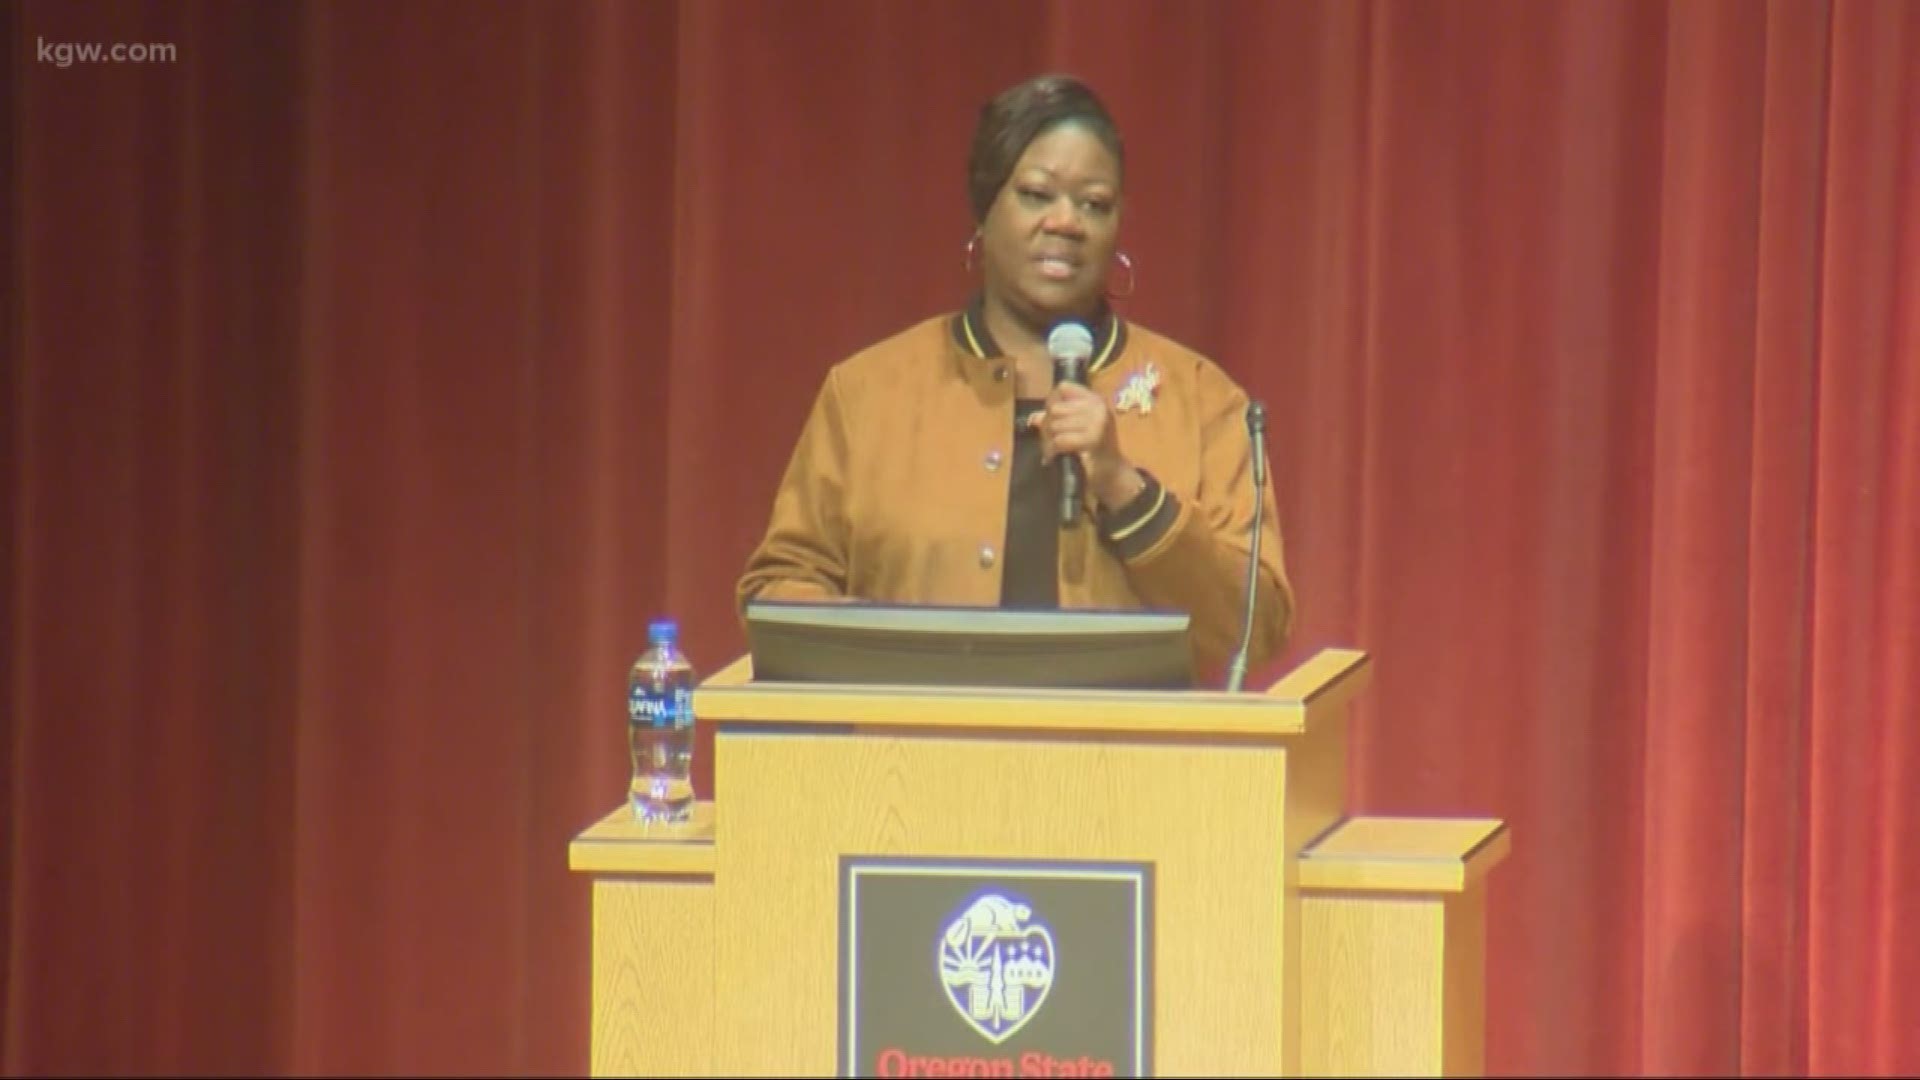 Sybrina Fulton, the mother of Trayvon Martin, spoke at Oregon State University as part of an MLK Day celebration.